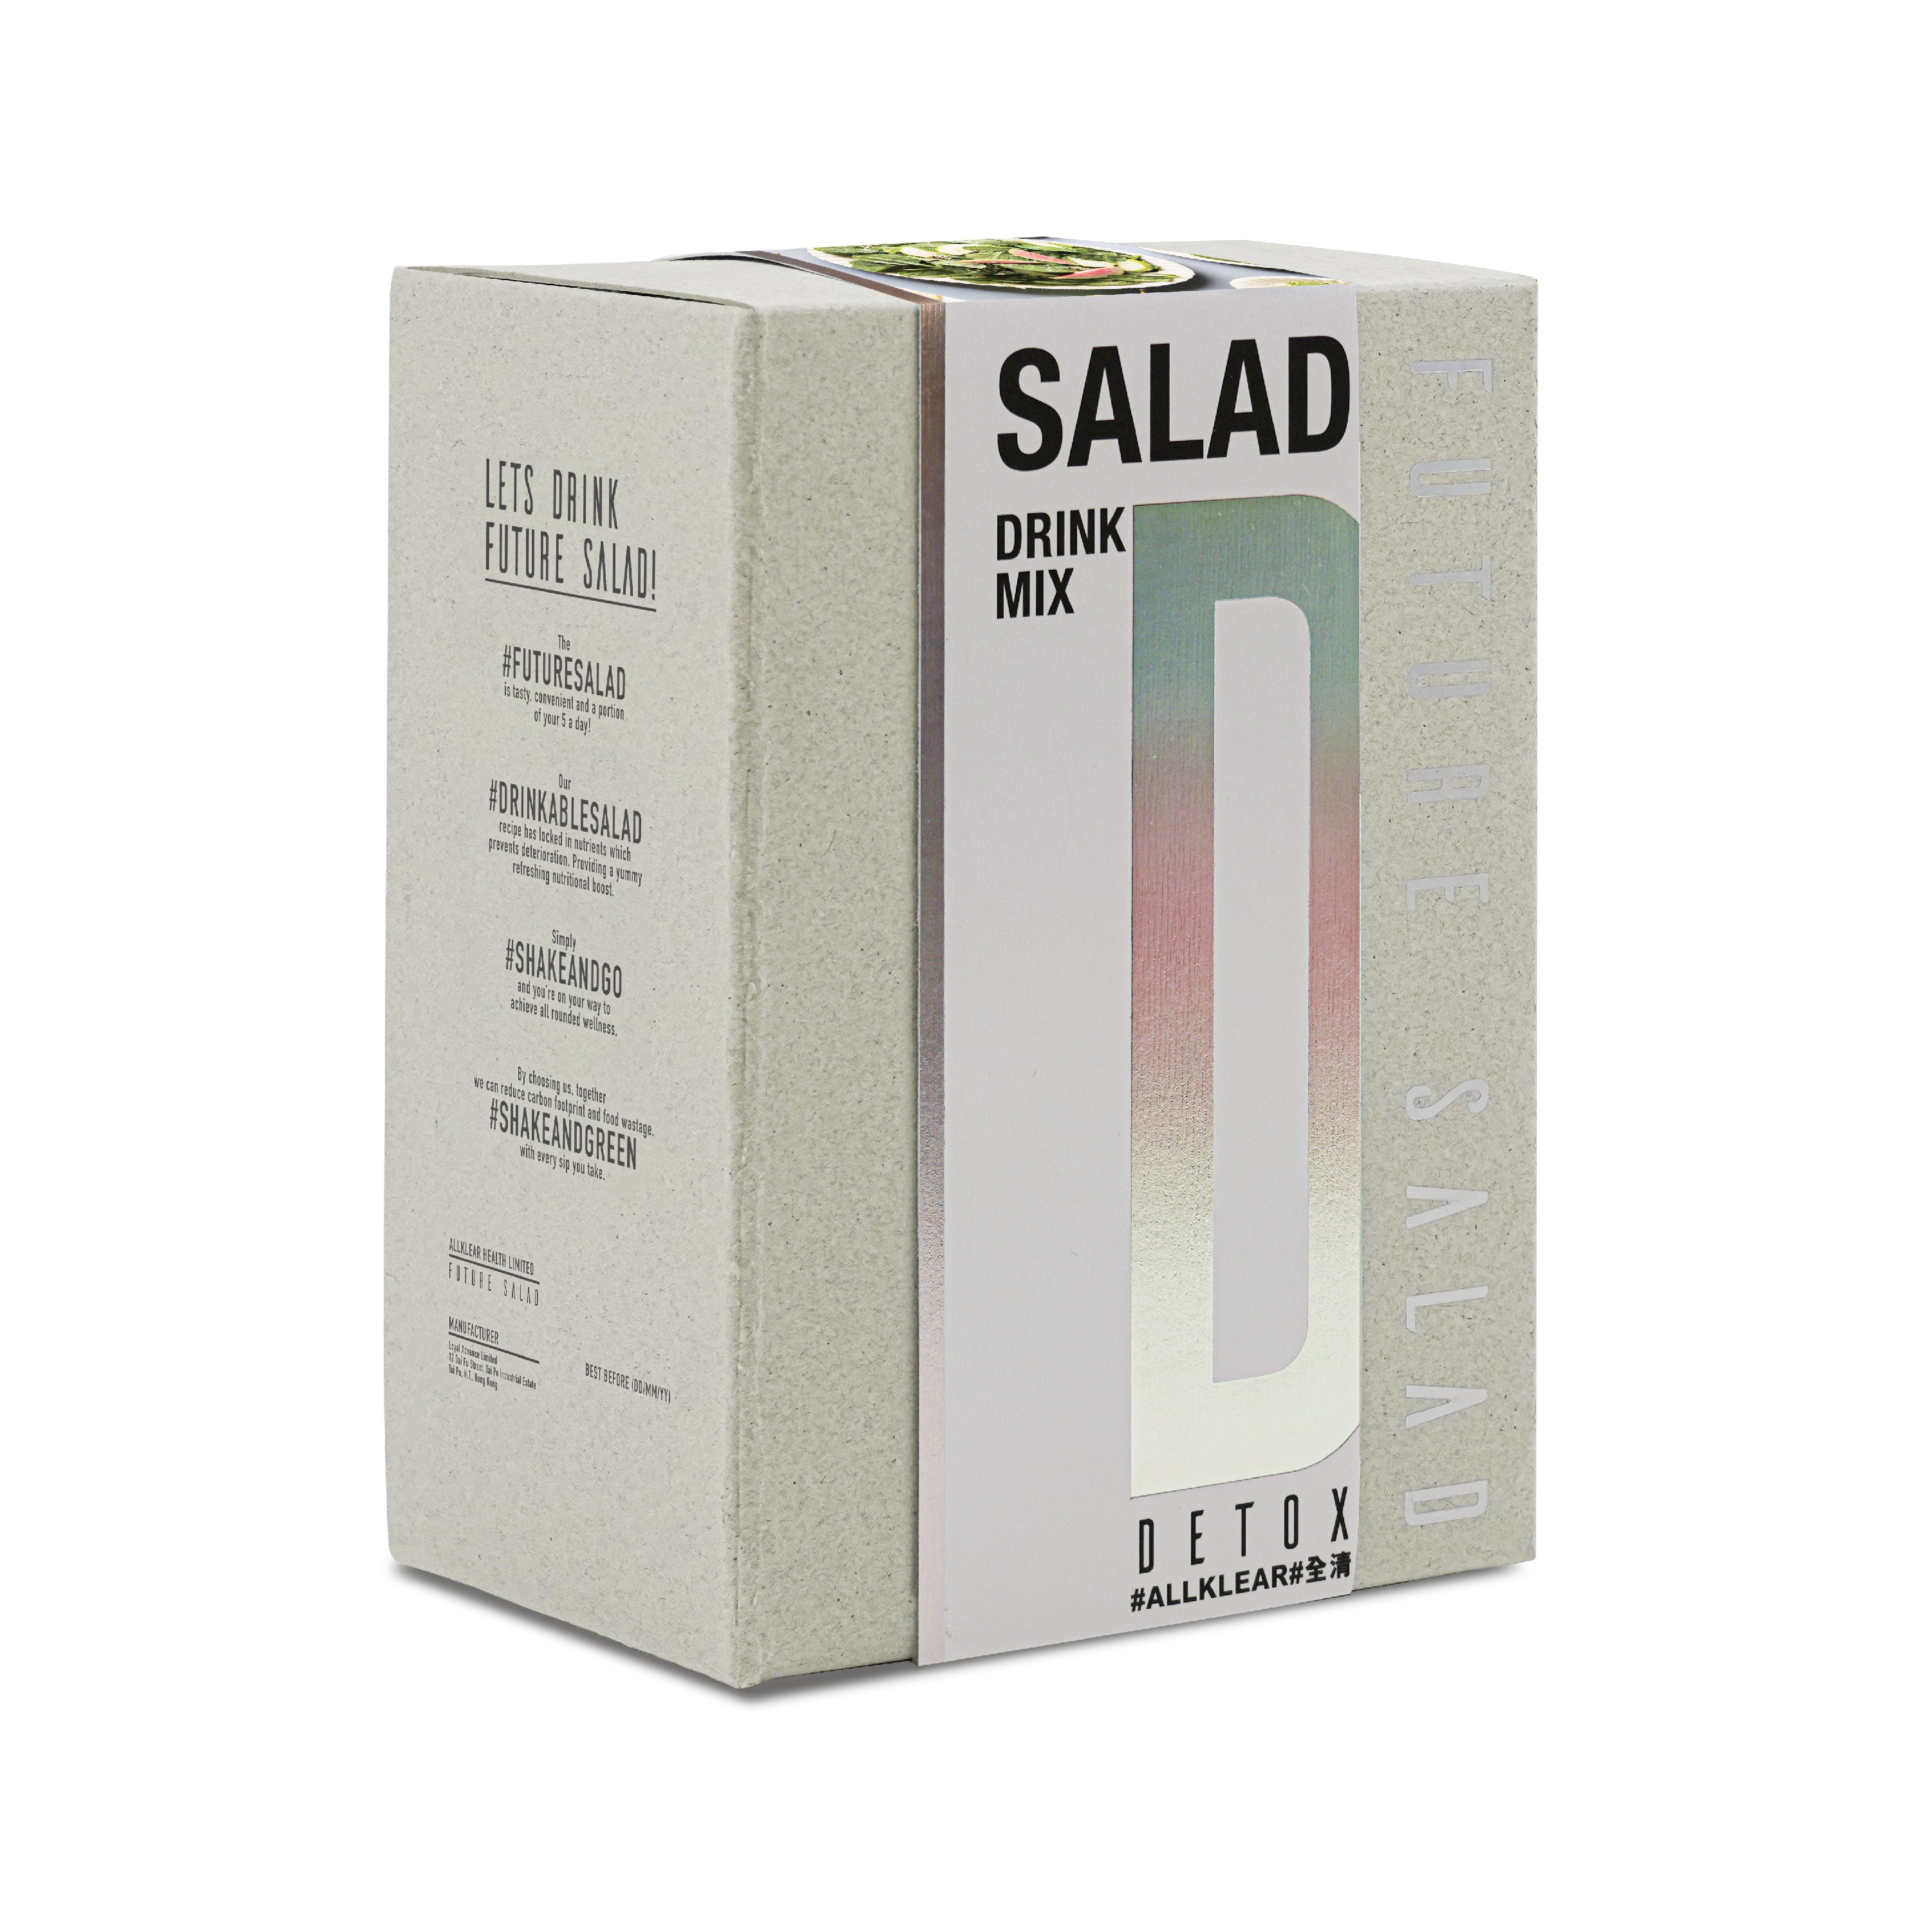 Lets Drink Future Salad | 全清 Allklear